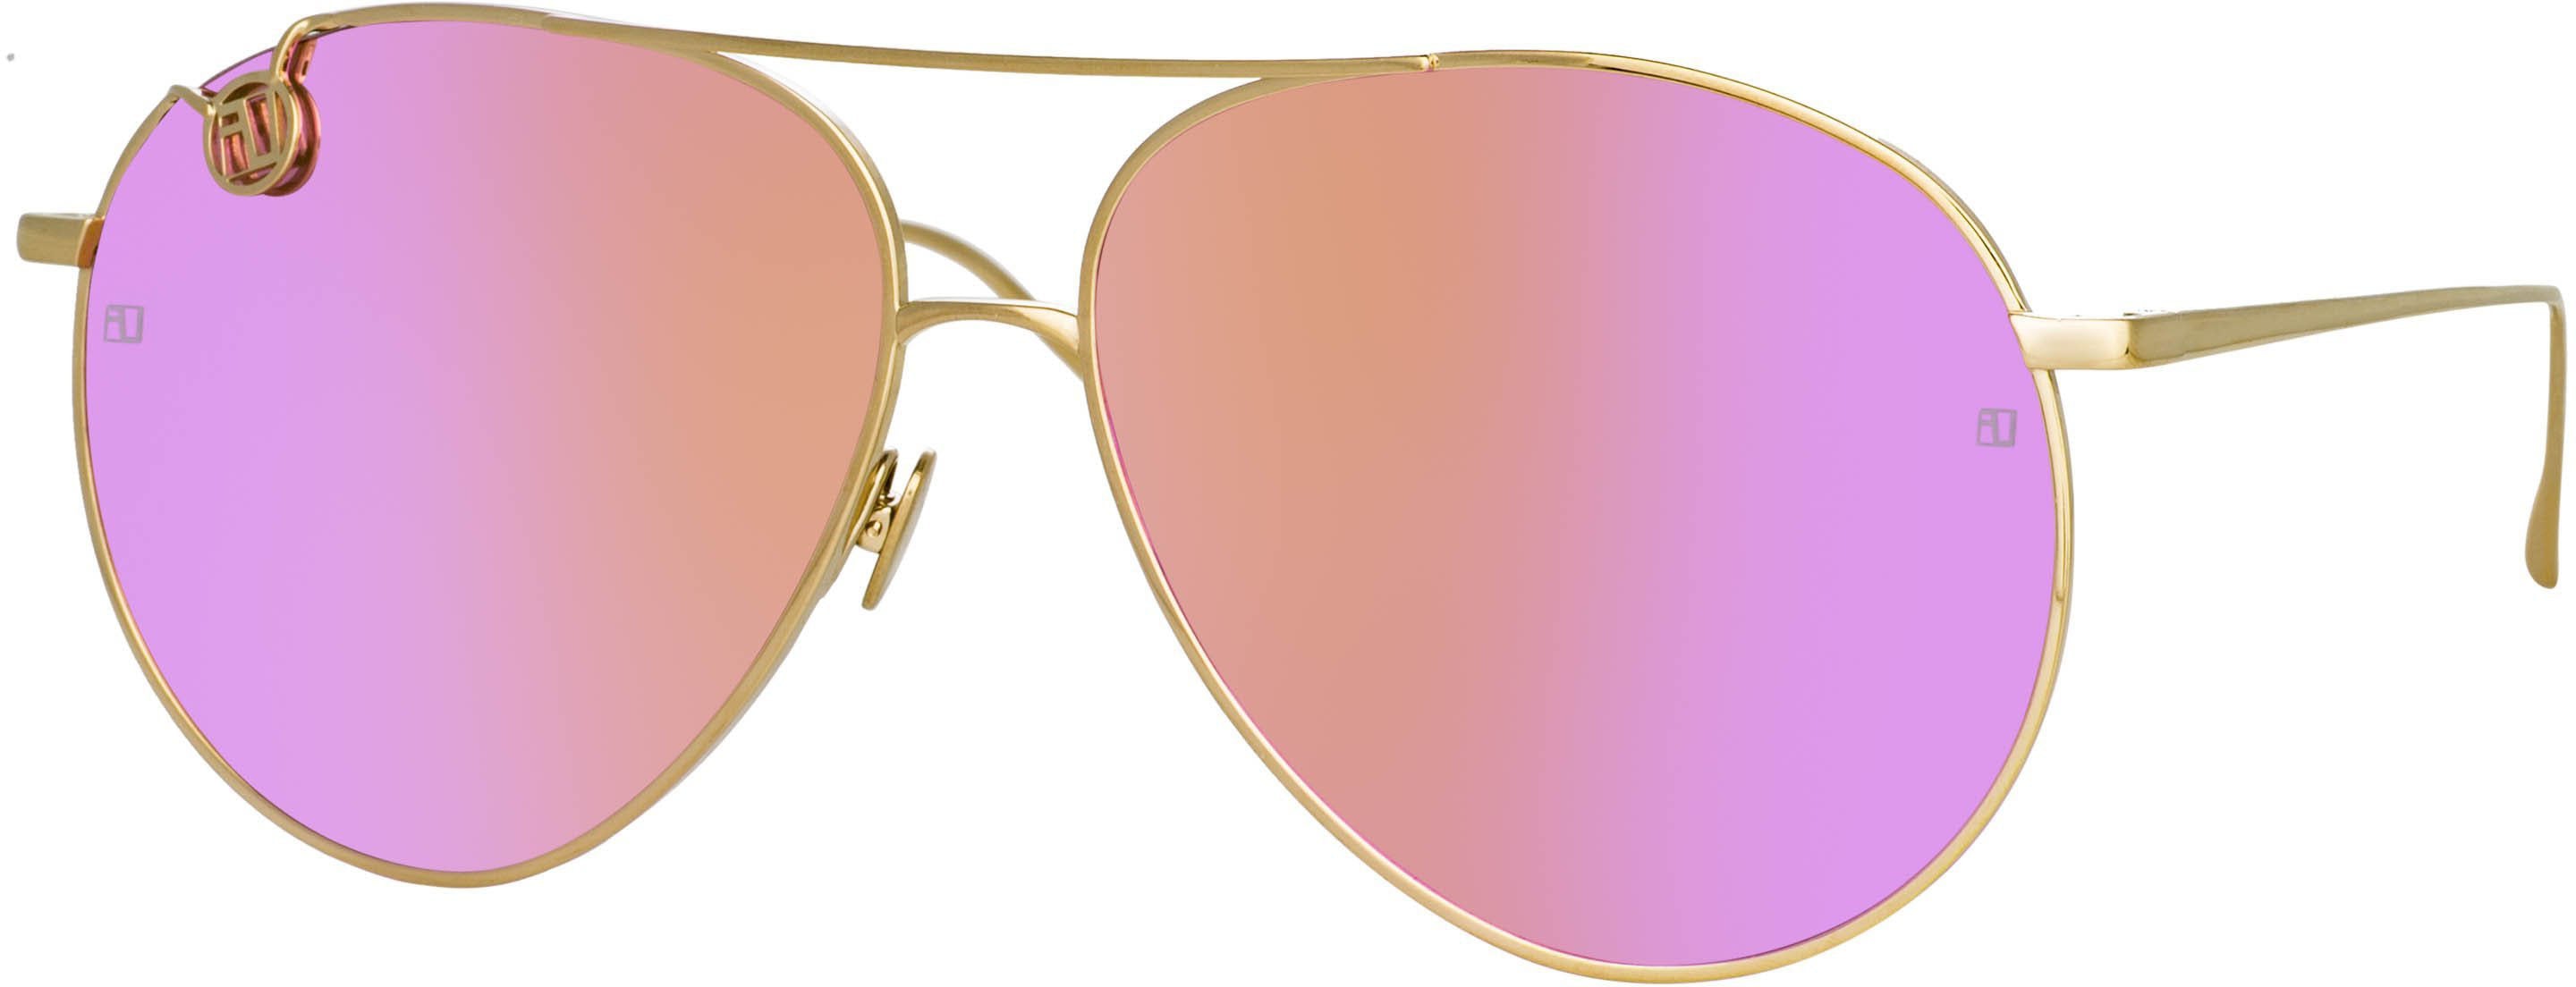 Color_LFL1055C5SUN - Joni Aviator Sunglasses in Light Gold and Pink